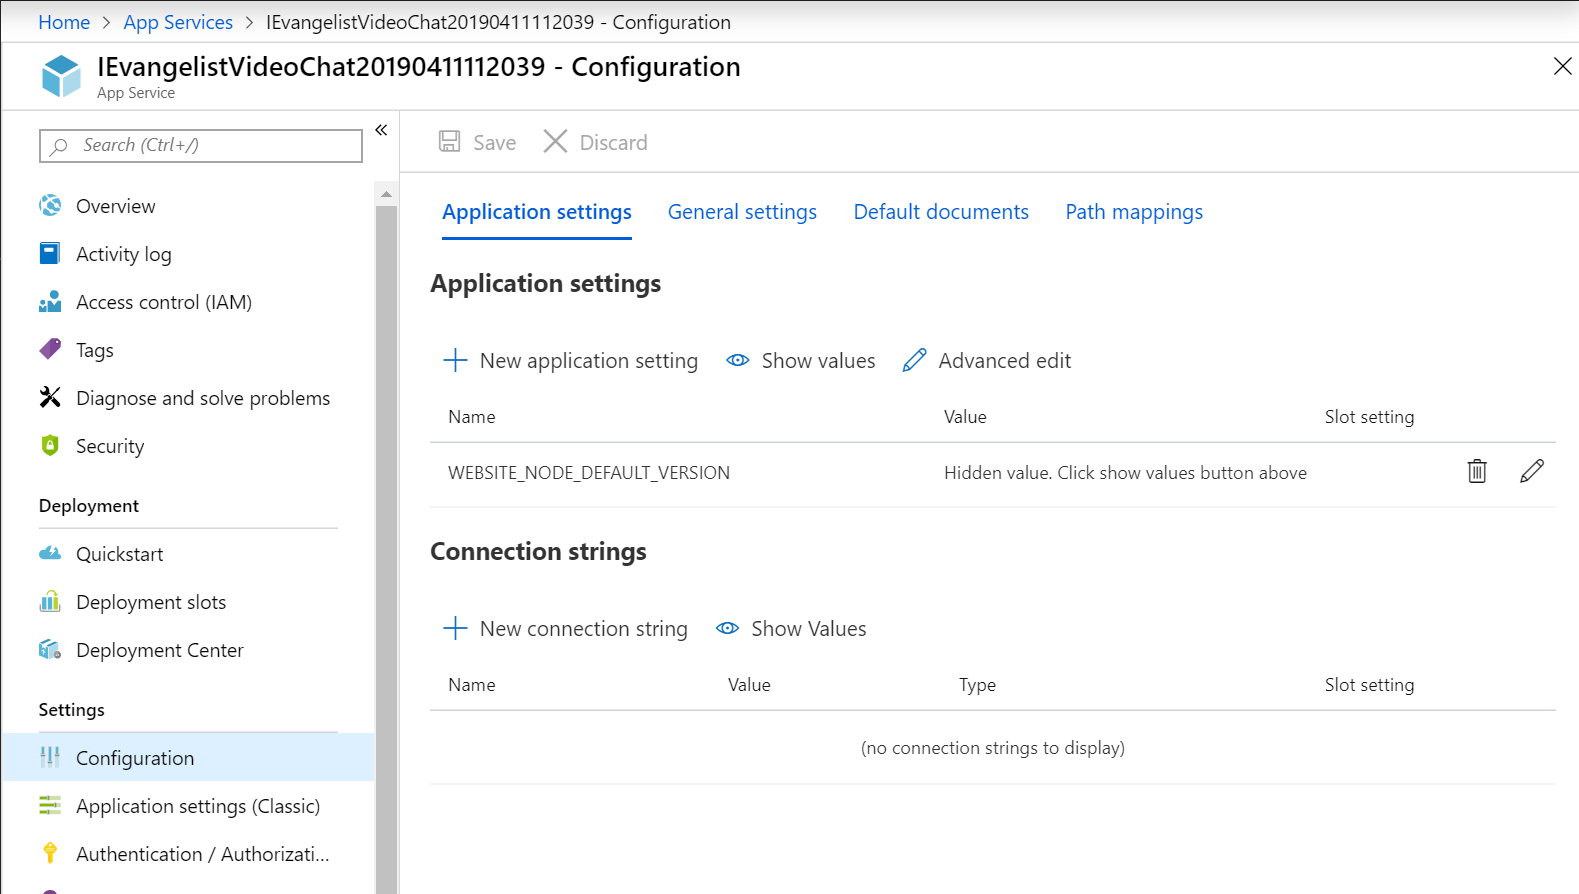 Azure Portal App Services Configuration user interface screenshot